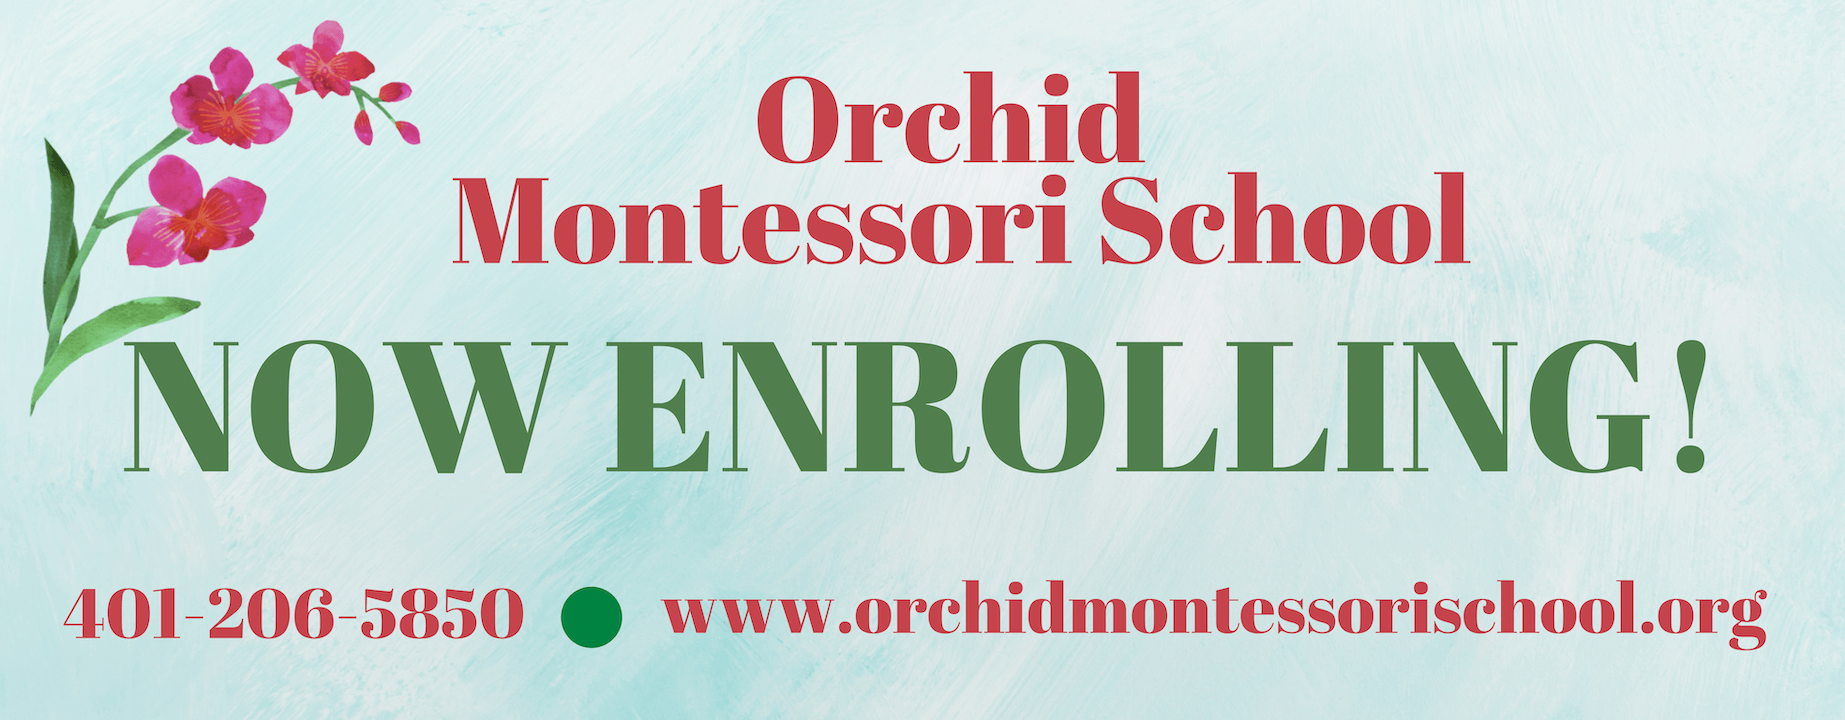 Orchid Montessori School, NOW ENROLLING! 401-206-5850, www.orchidmontessorischool.org